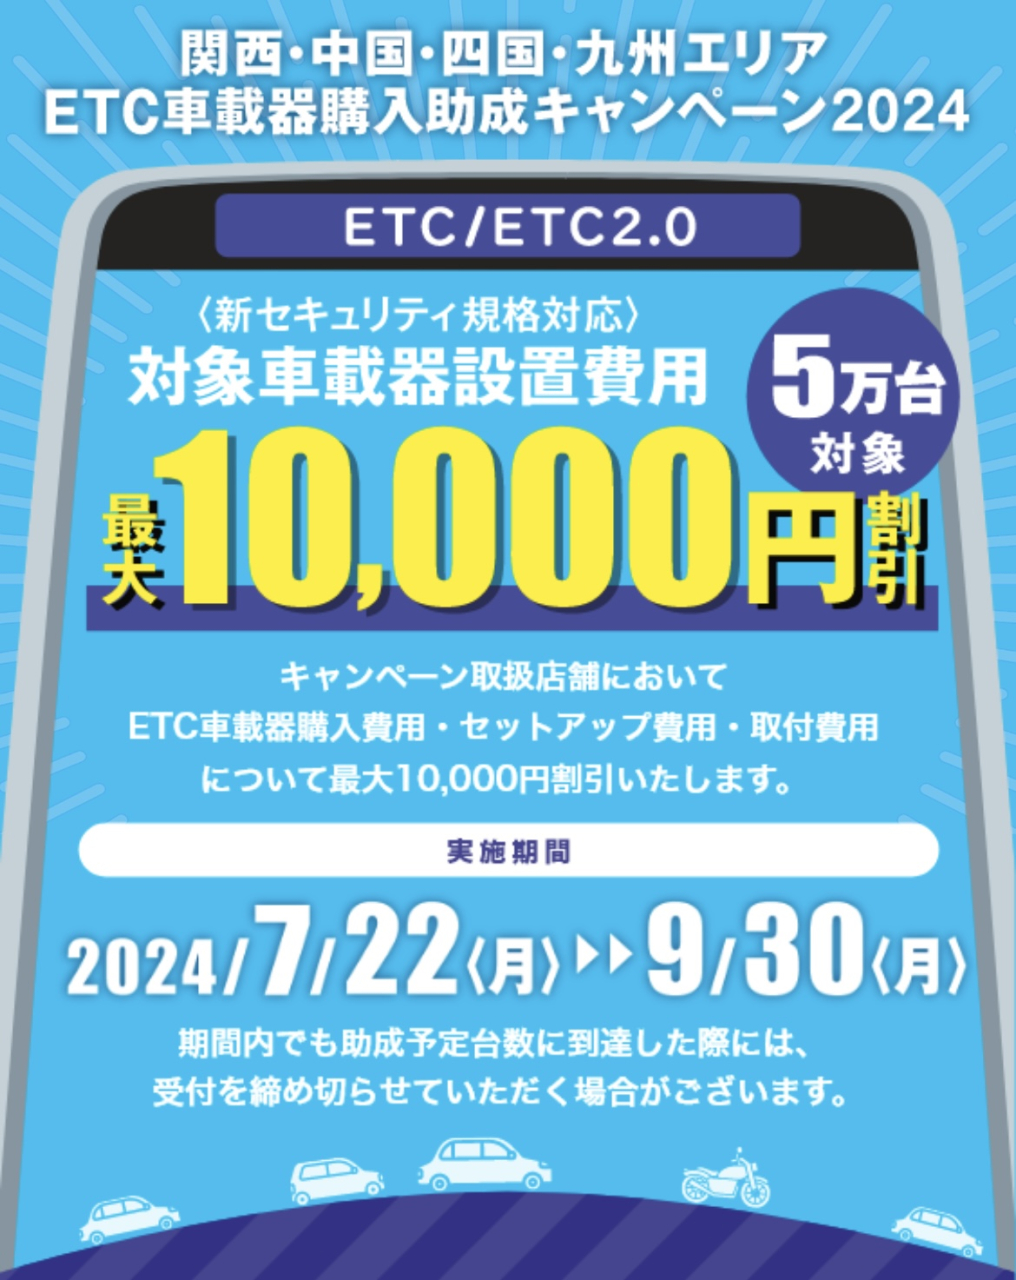 ETC 購入助成キャンペーン2024